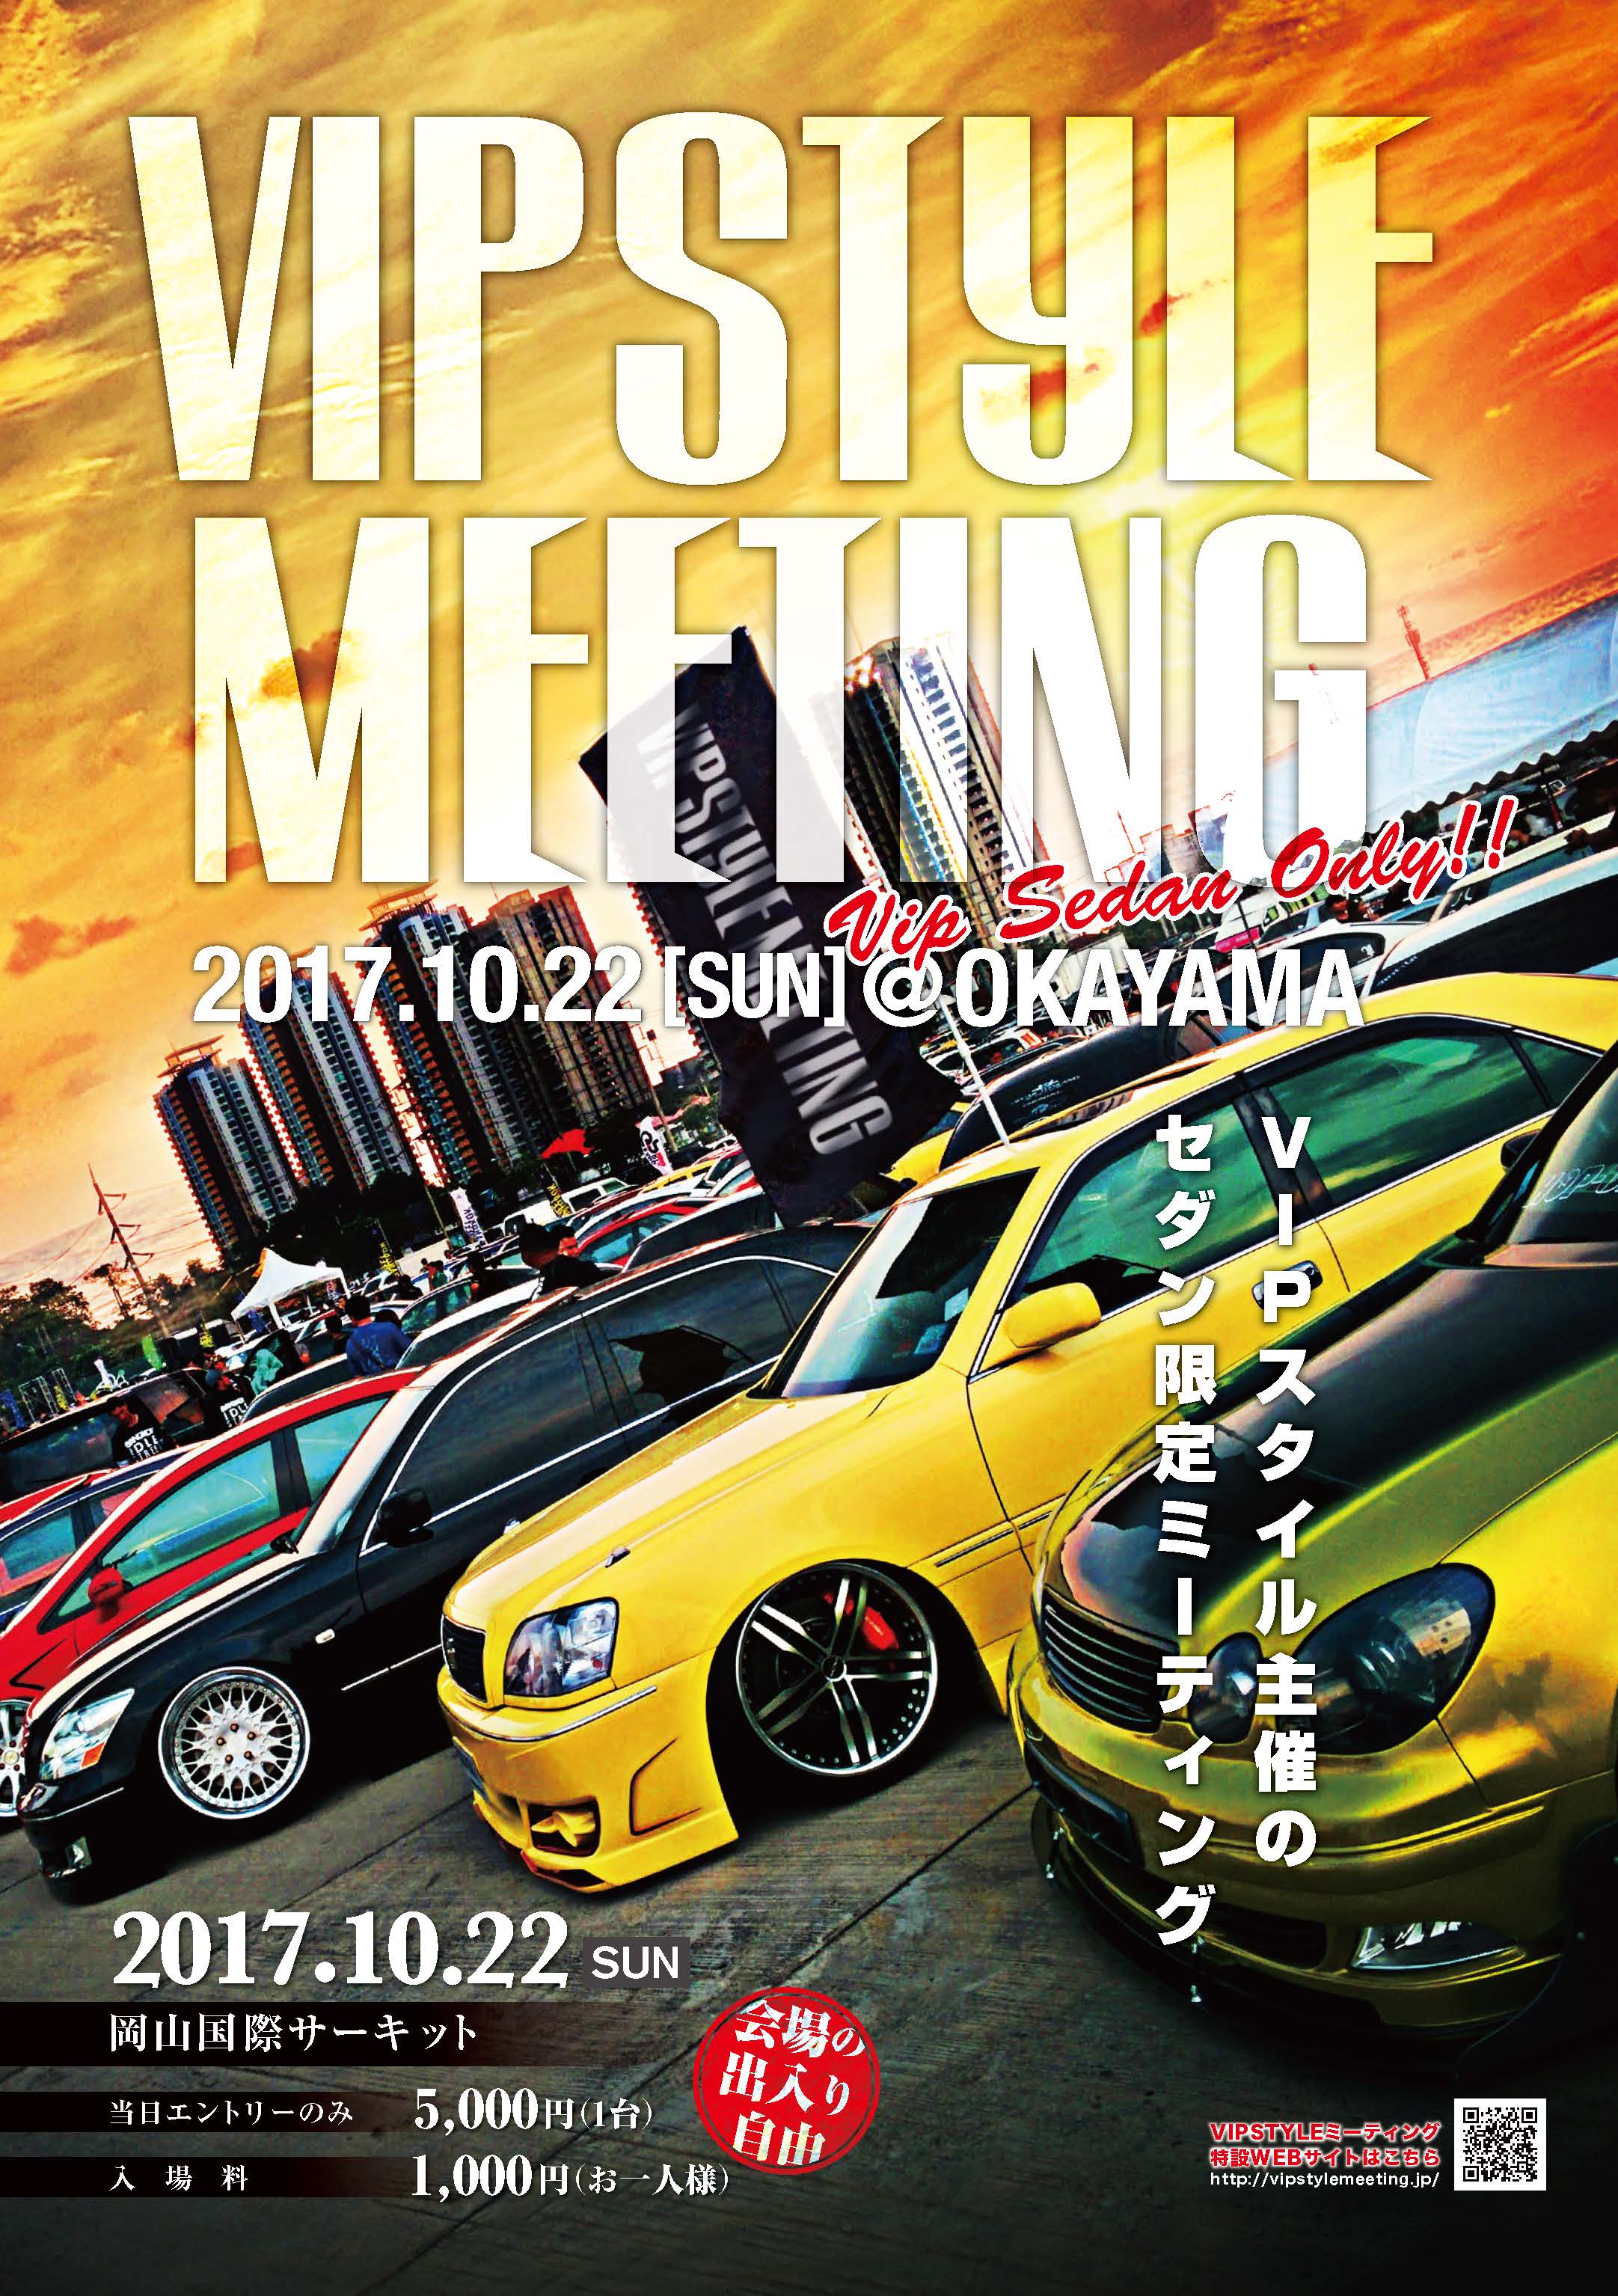 VIP STYLE MEETING出展決定です!! - VIP STYLE MEETING